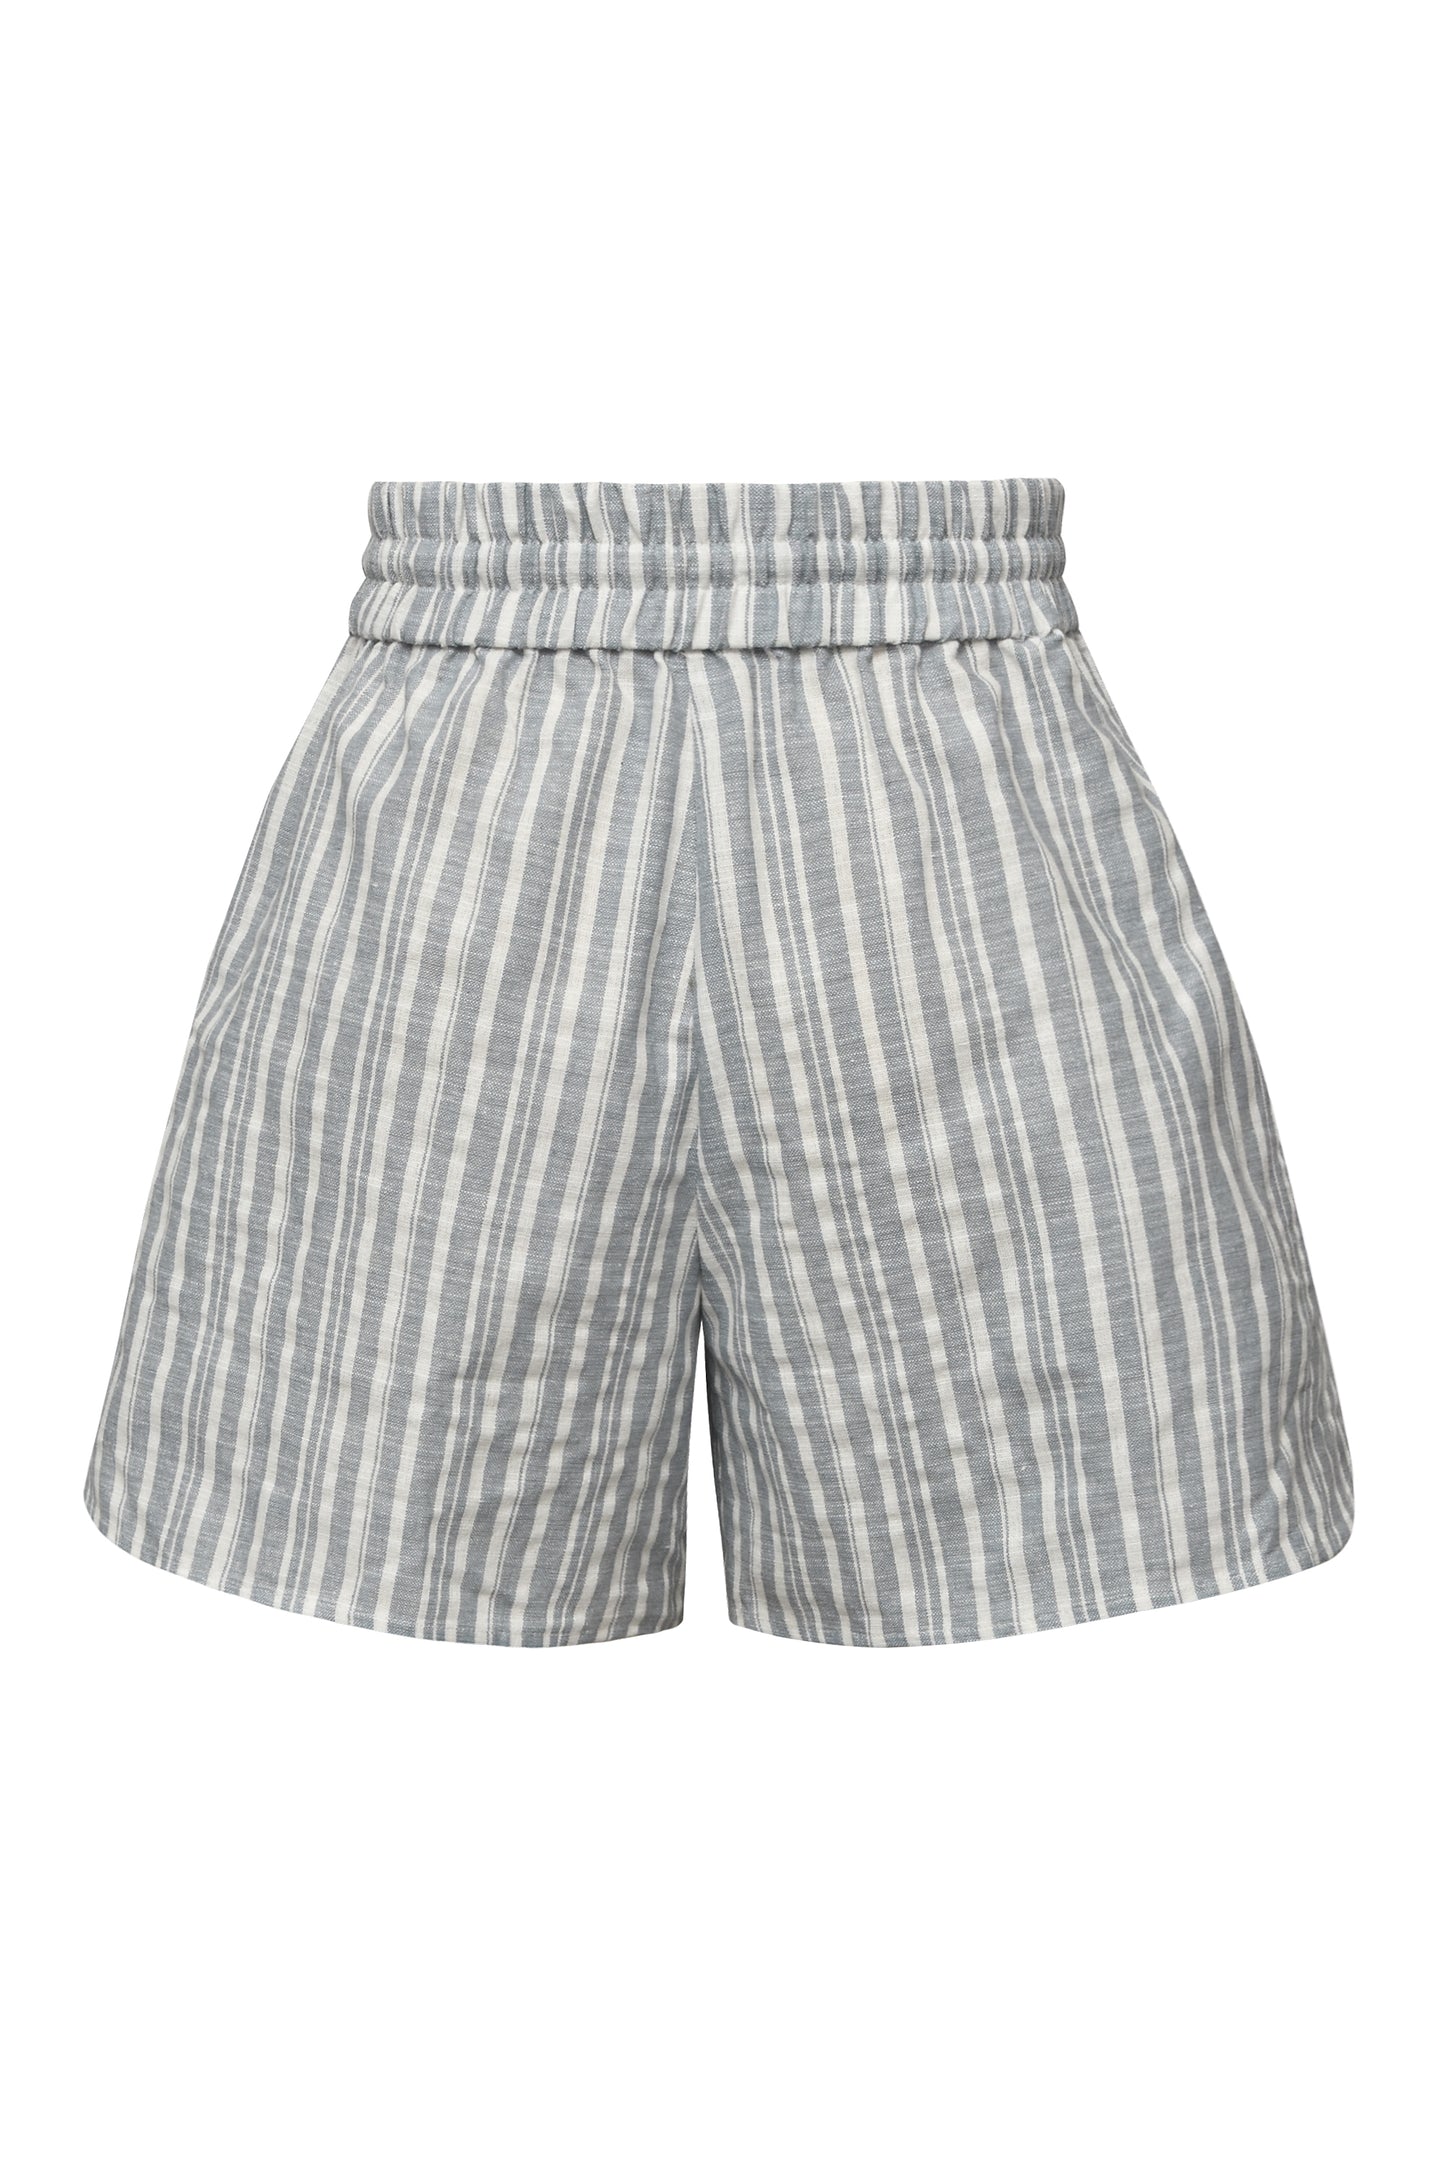 A-VIEW - Annali stripe linen shorts - Blå & hvid